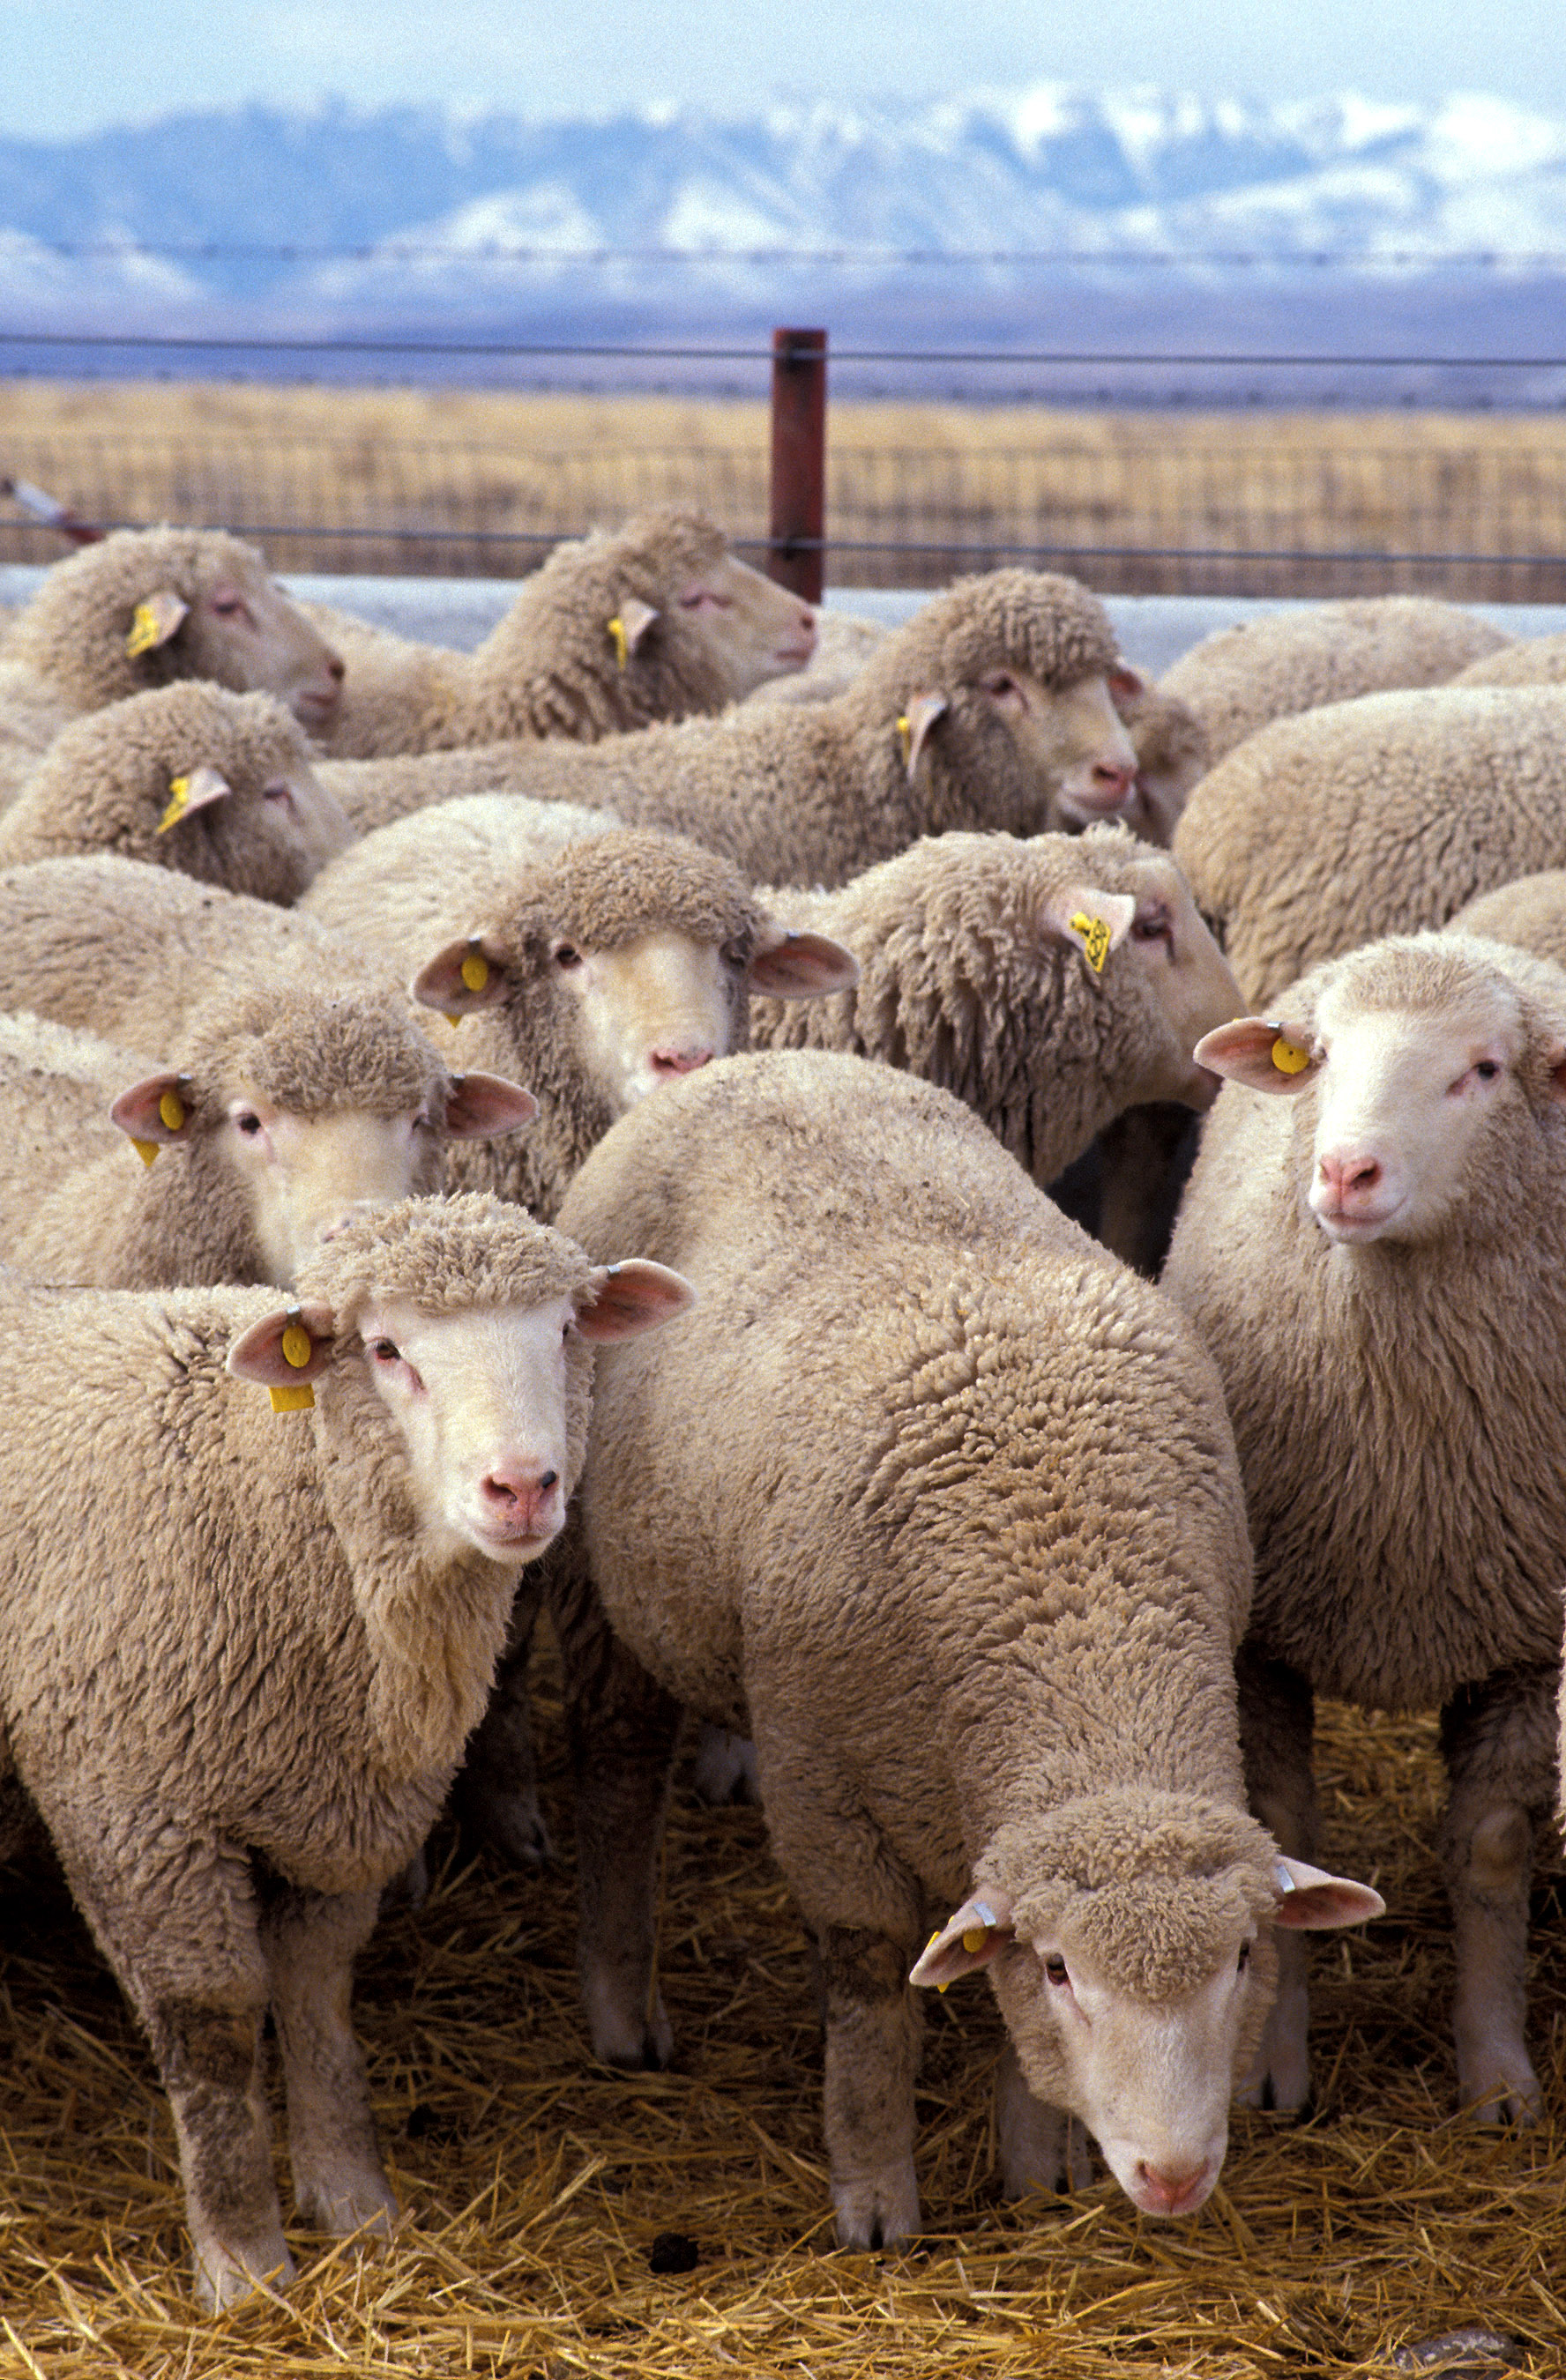 http://upload.wikimedia.org/wikipedia/commons/2/2c/Flock_of_sheep.jpg